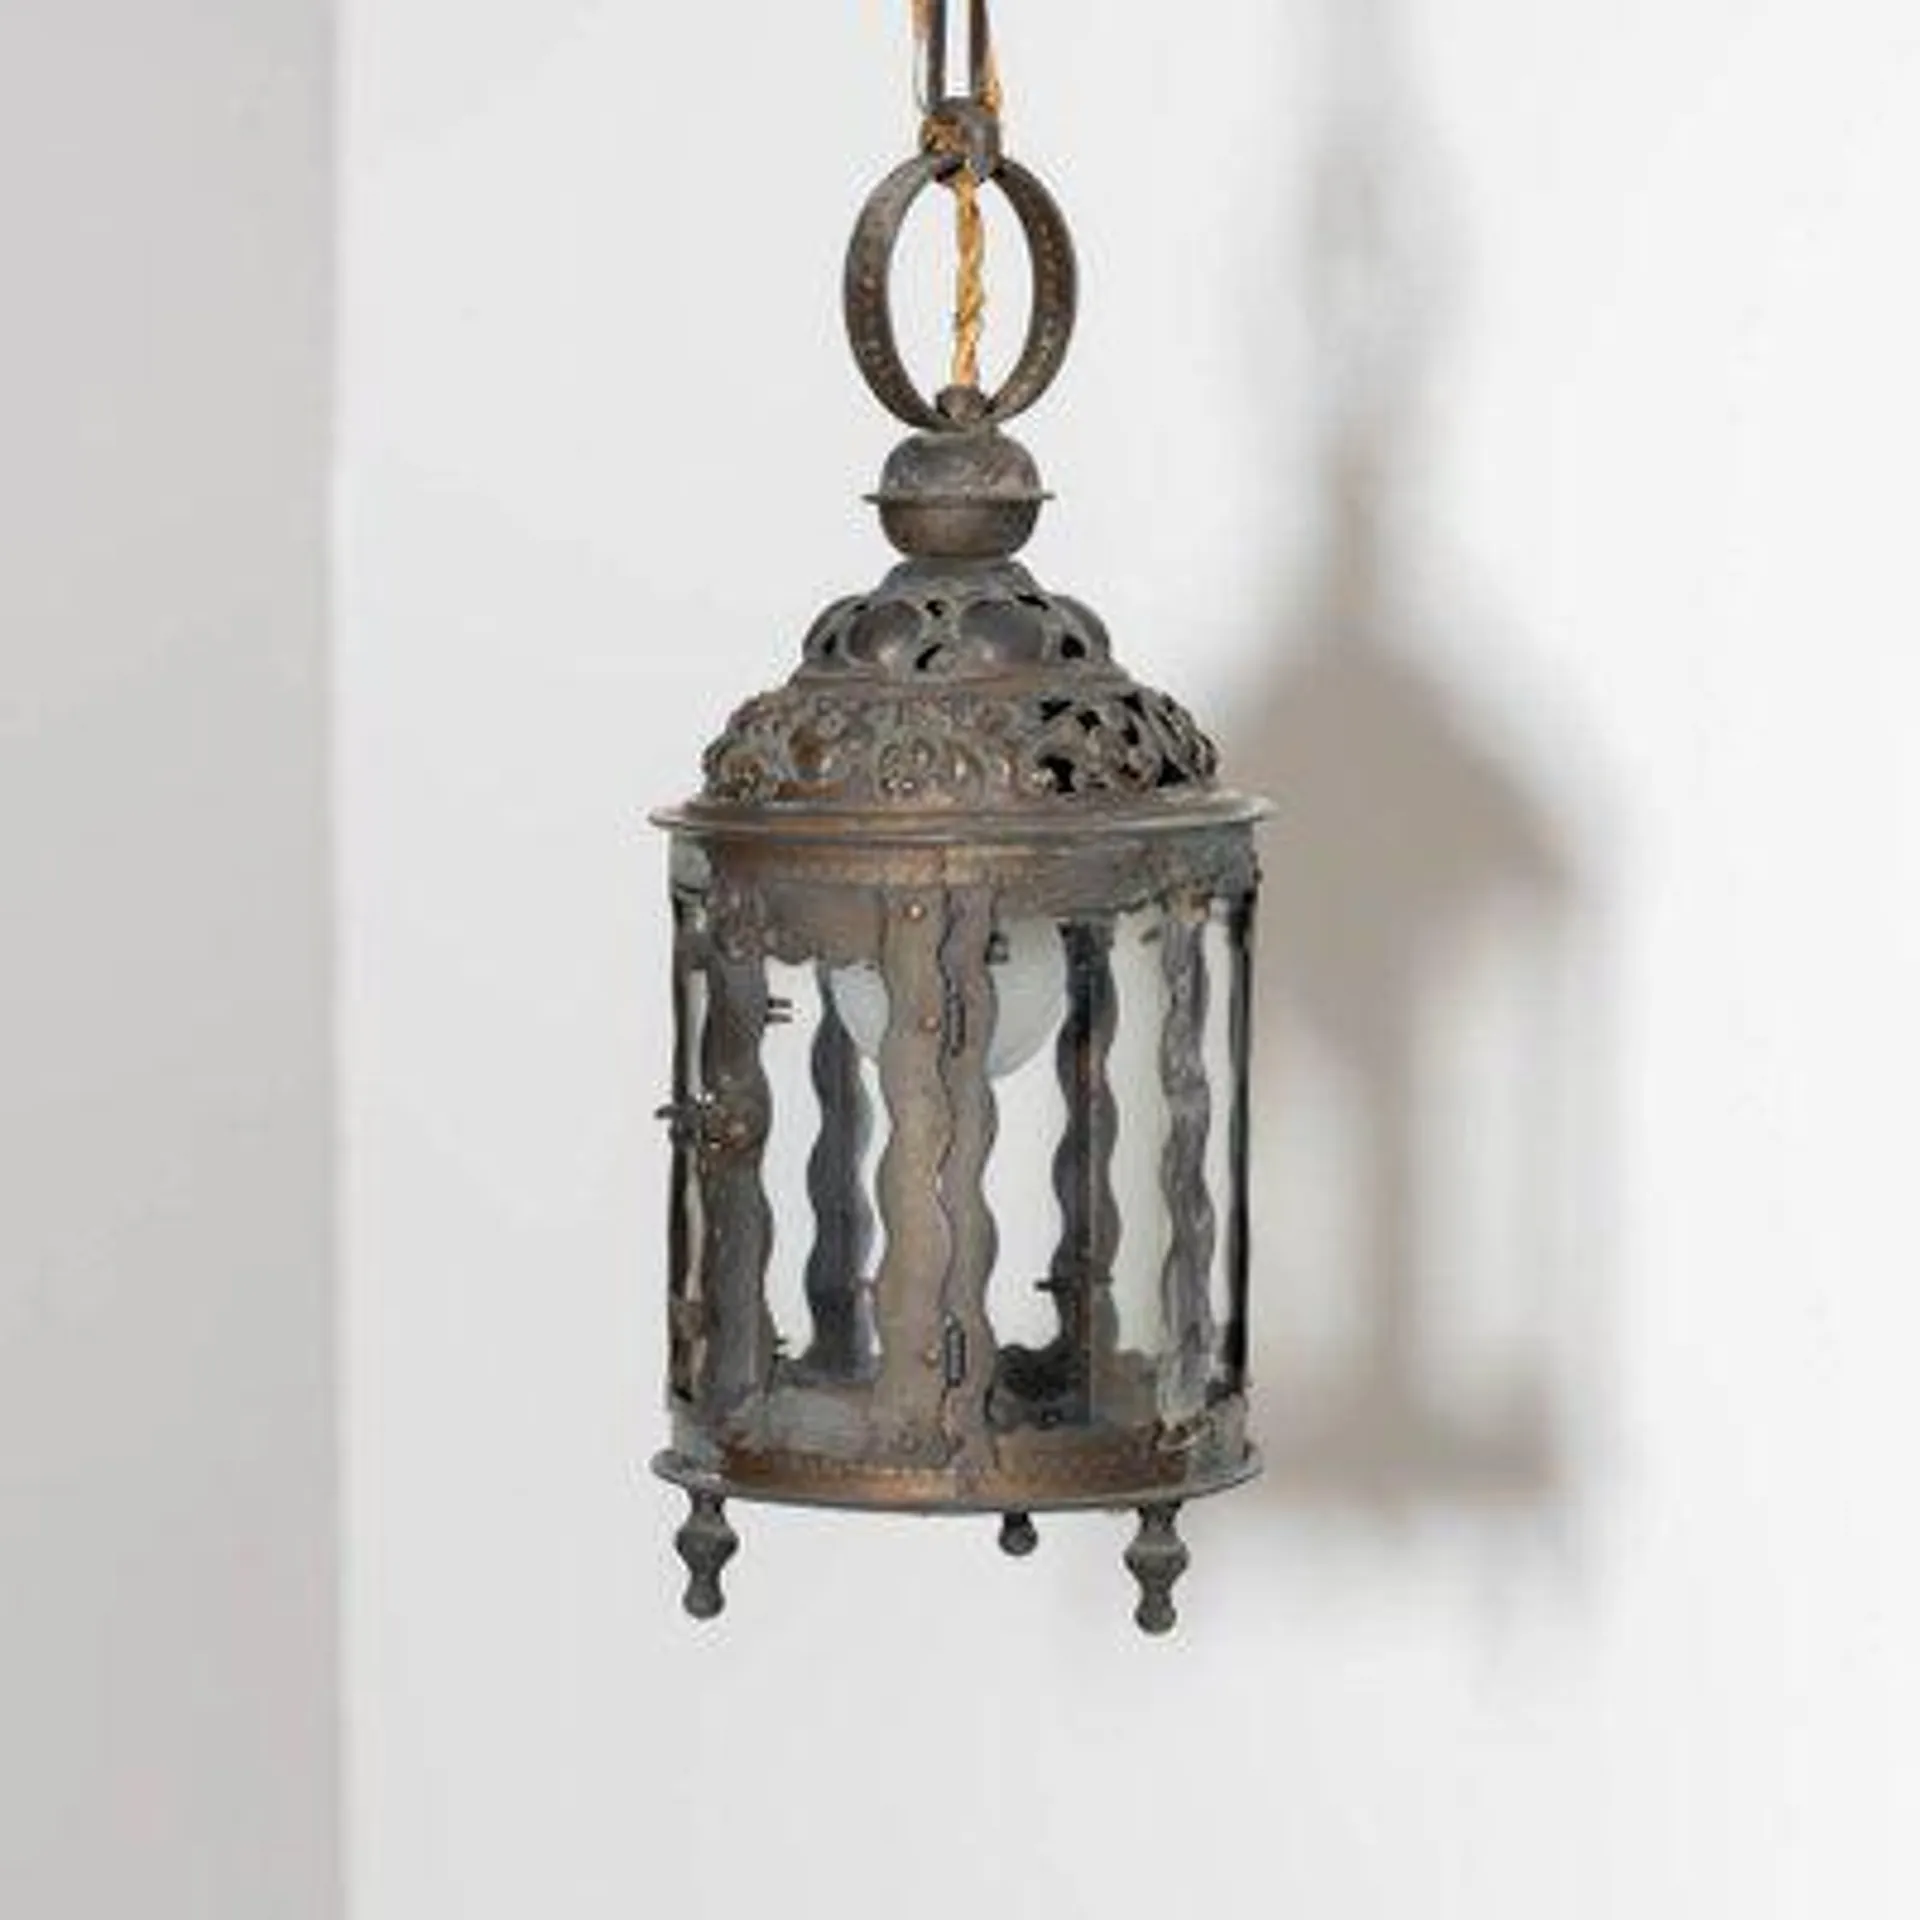 Copper Lanterns, 1800s, Set of 2